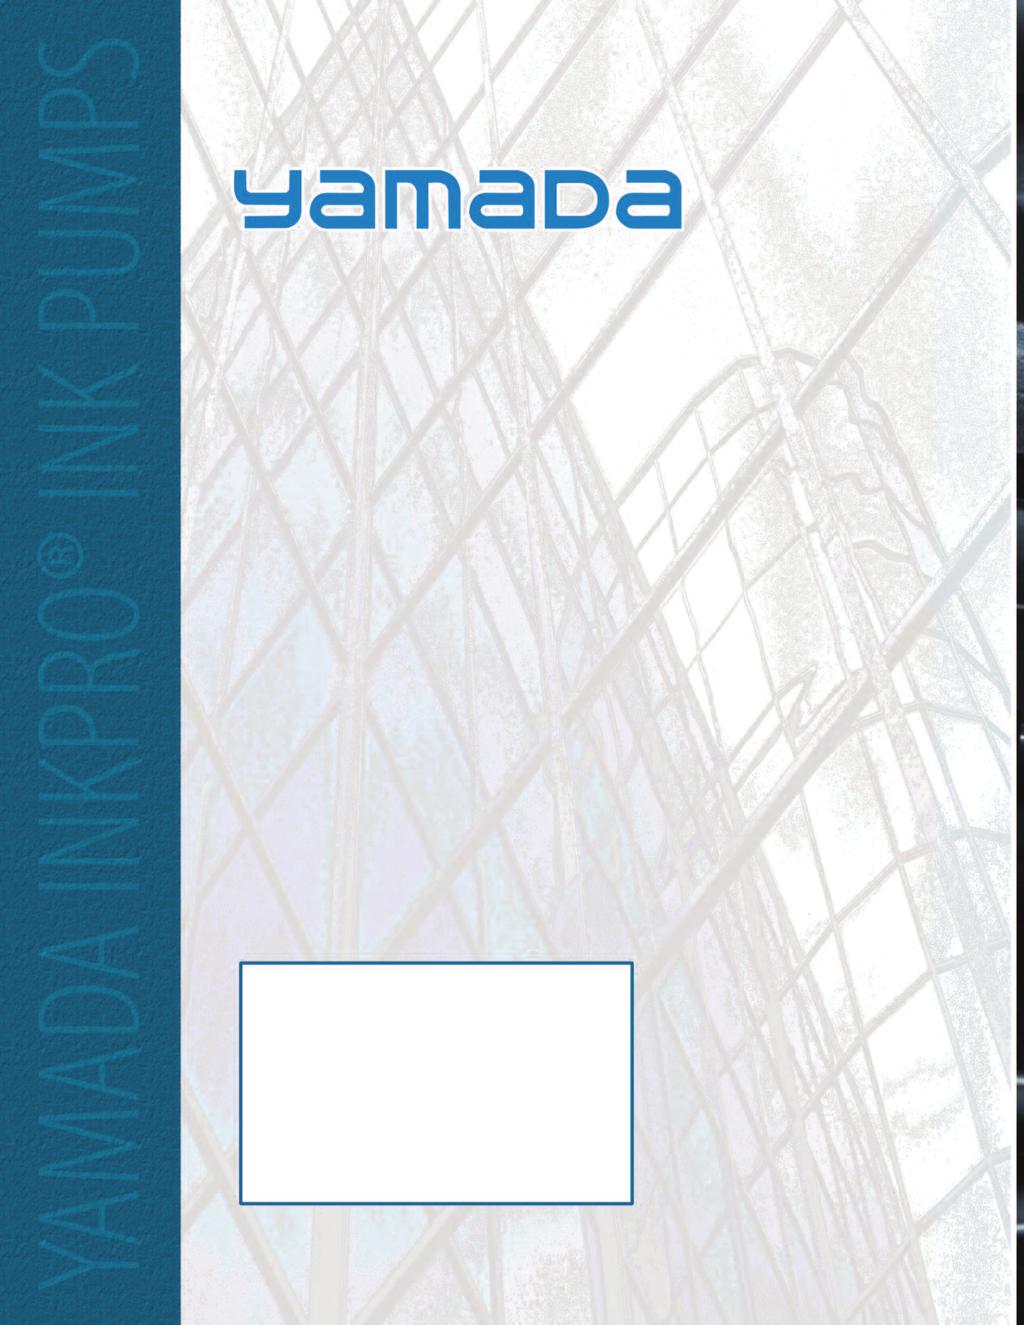 Yamada America, Inc.